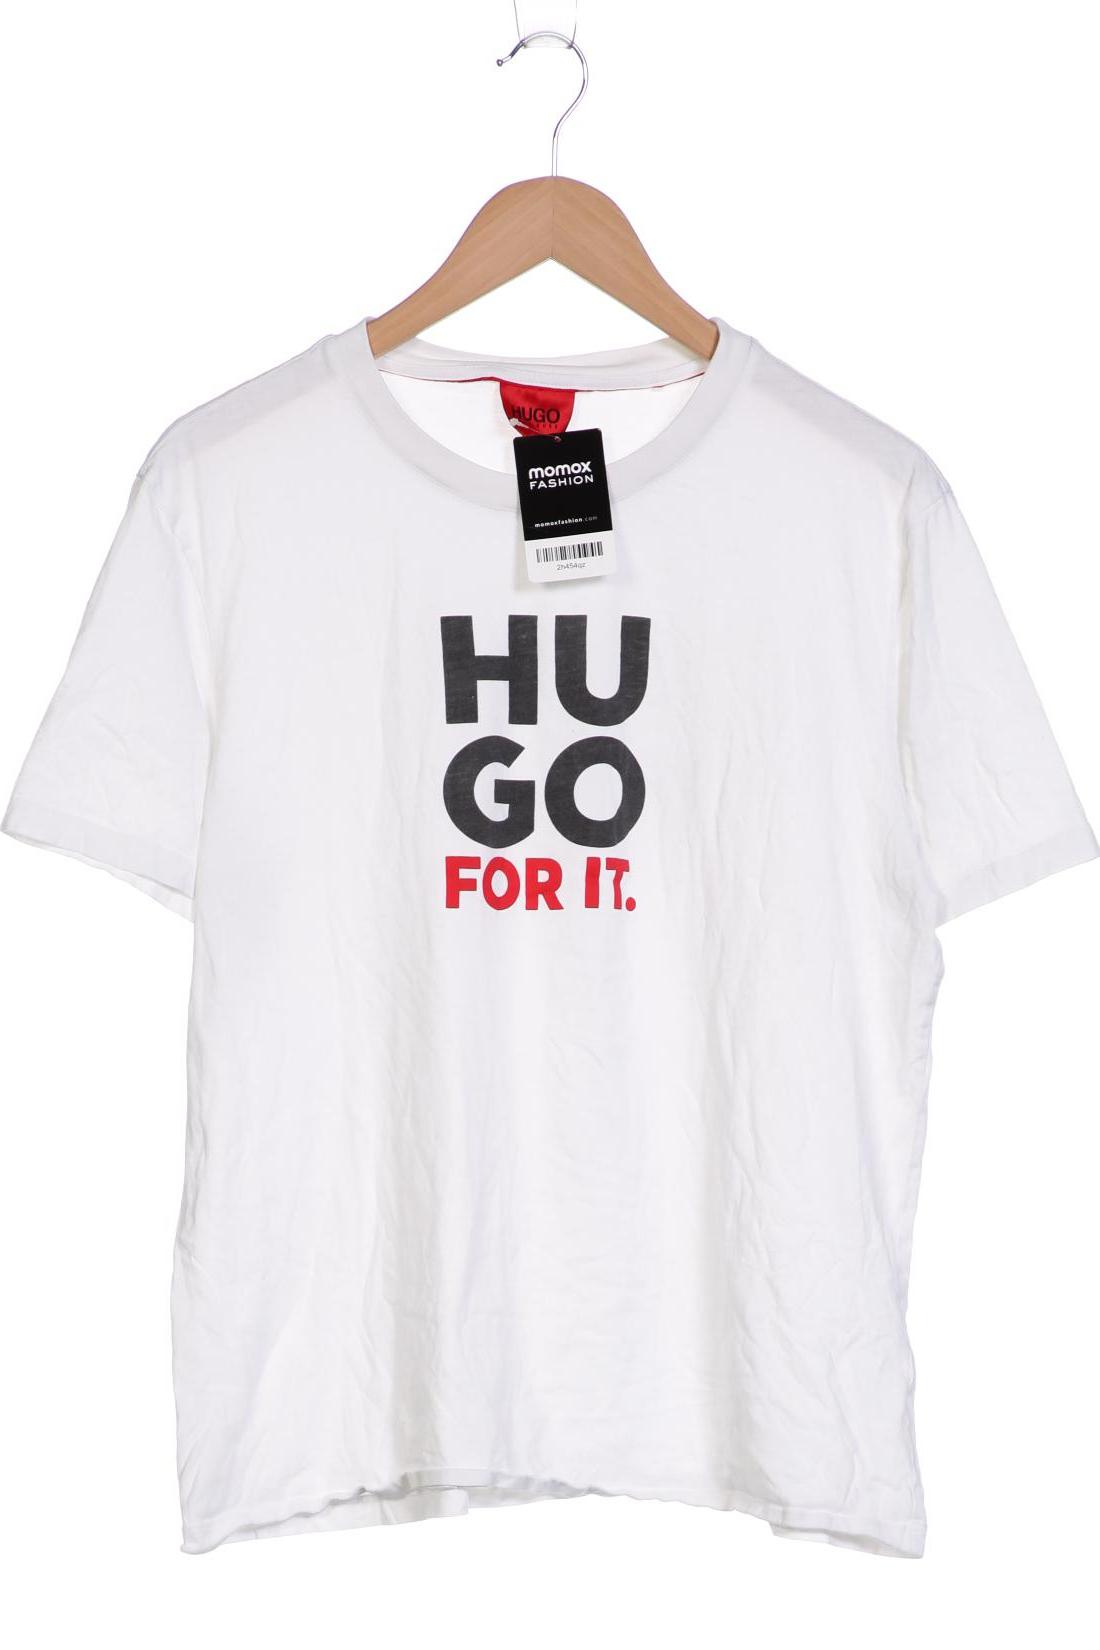 HUGO by Hugo Boss Herren T-Shirt, weiß von HUGO by Hugo Boss